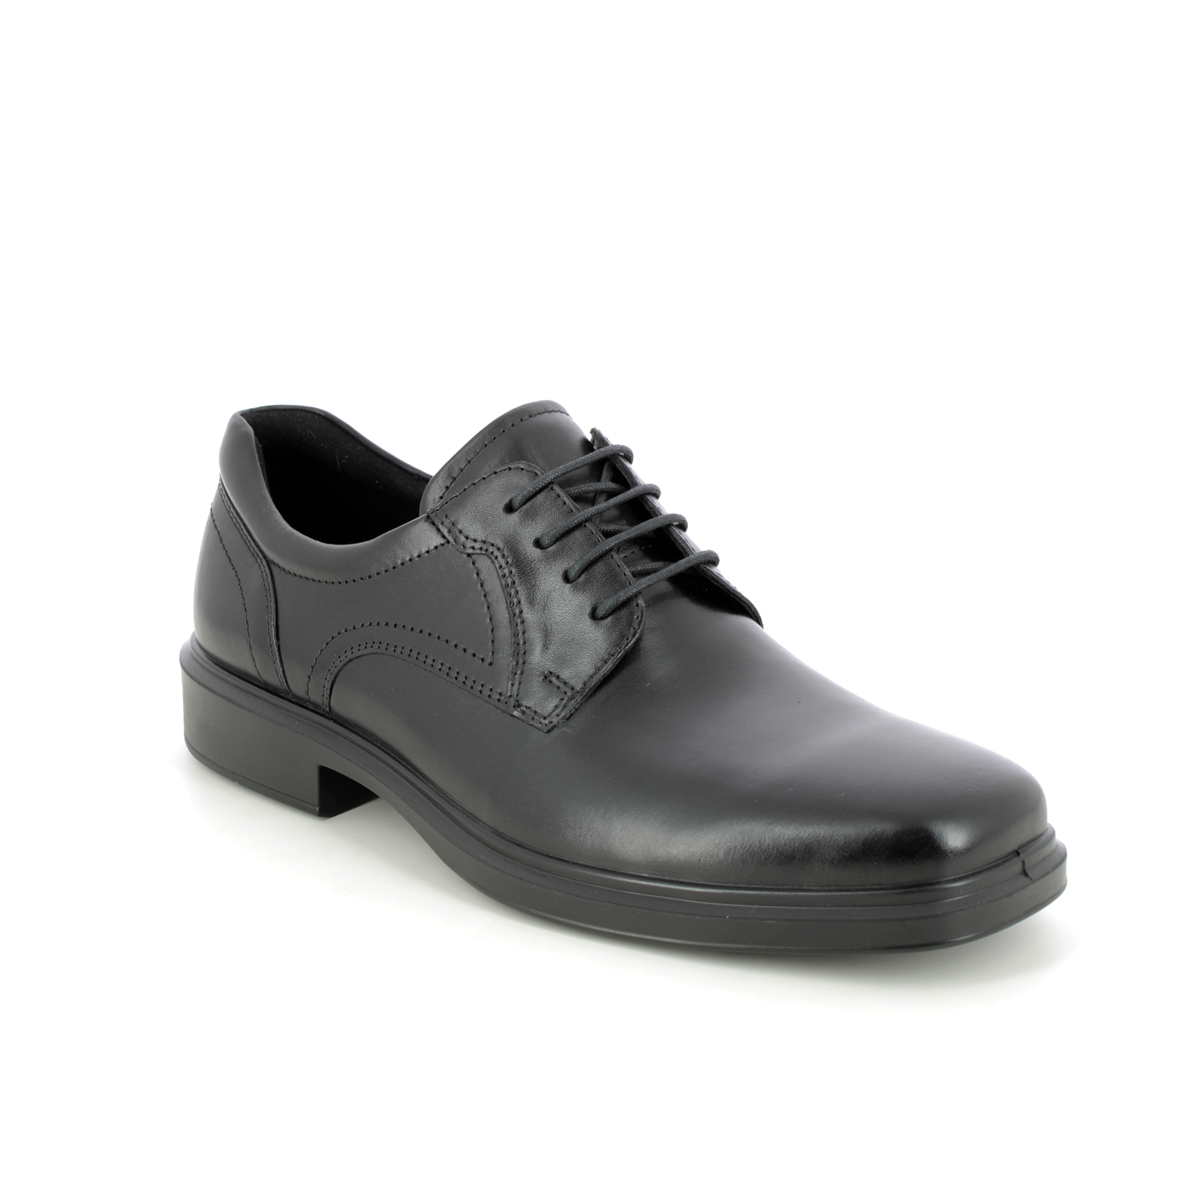 Ecco Helsinki 2 Plain Black Leather Mens Formal Shoes 500164-01001 In Size 43 In Plain Black Leather